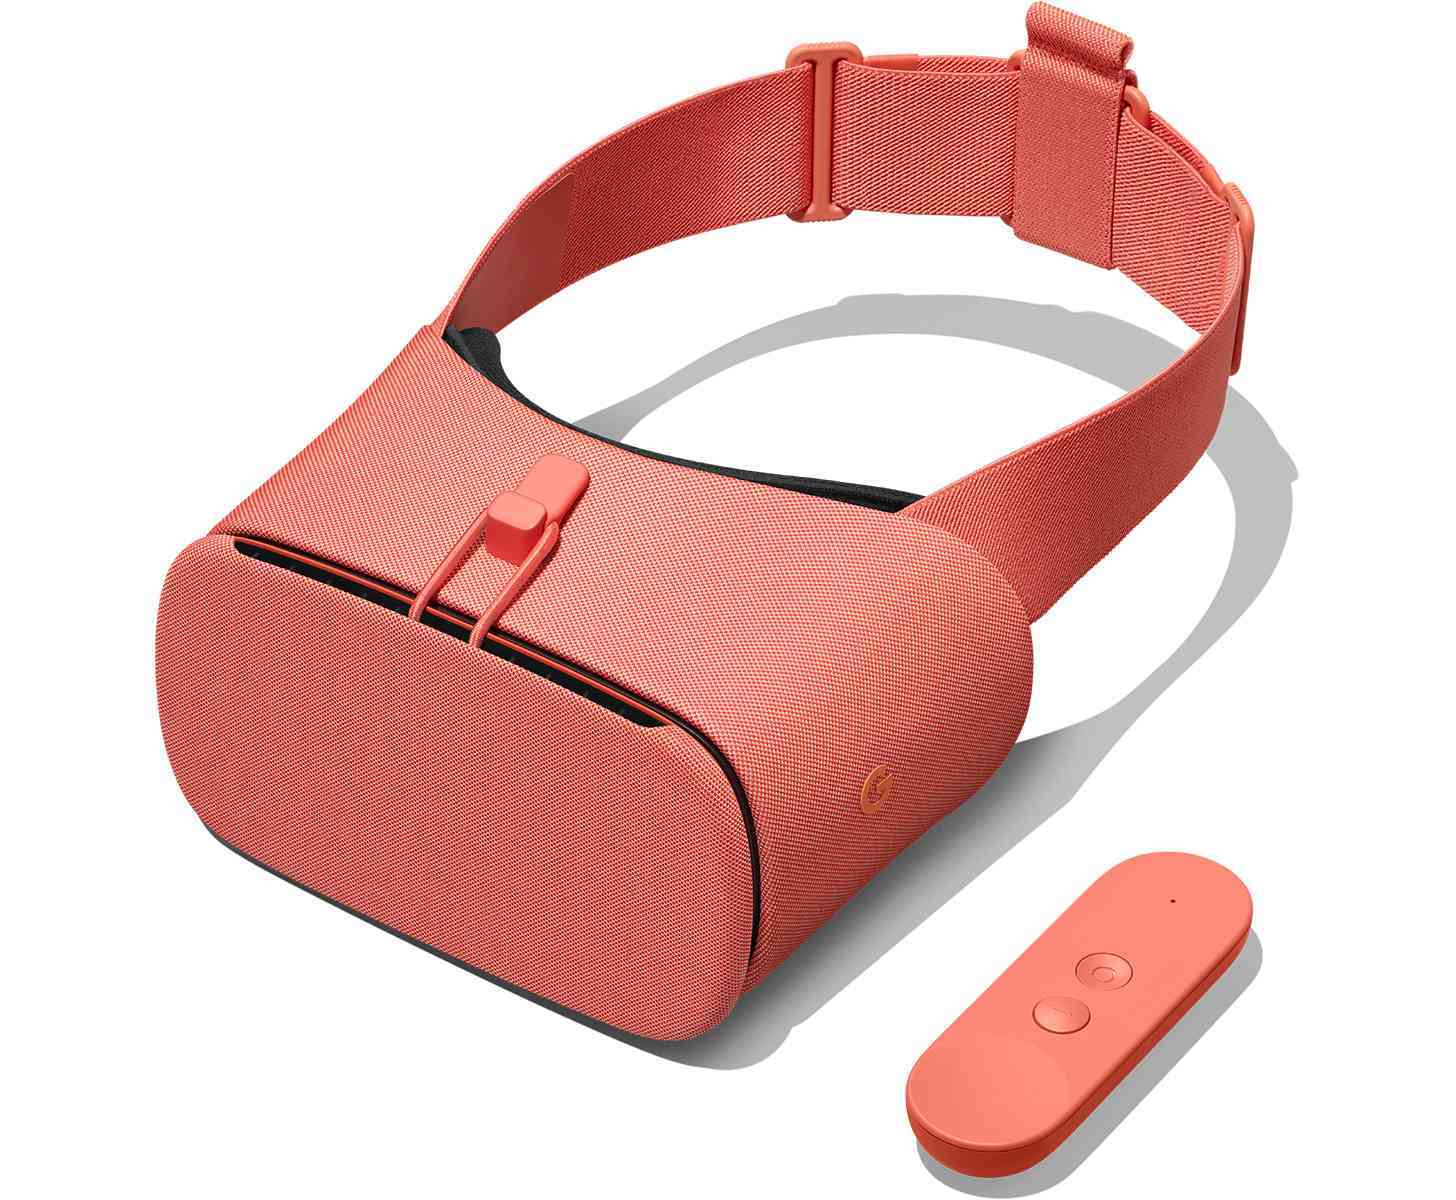 Google Daydream View VR headset